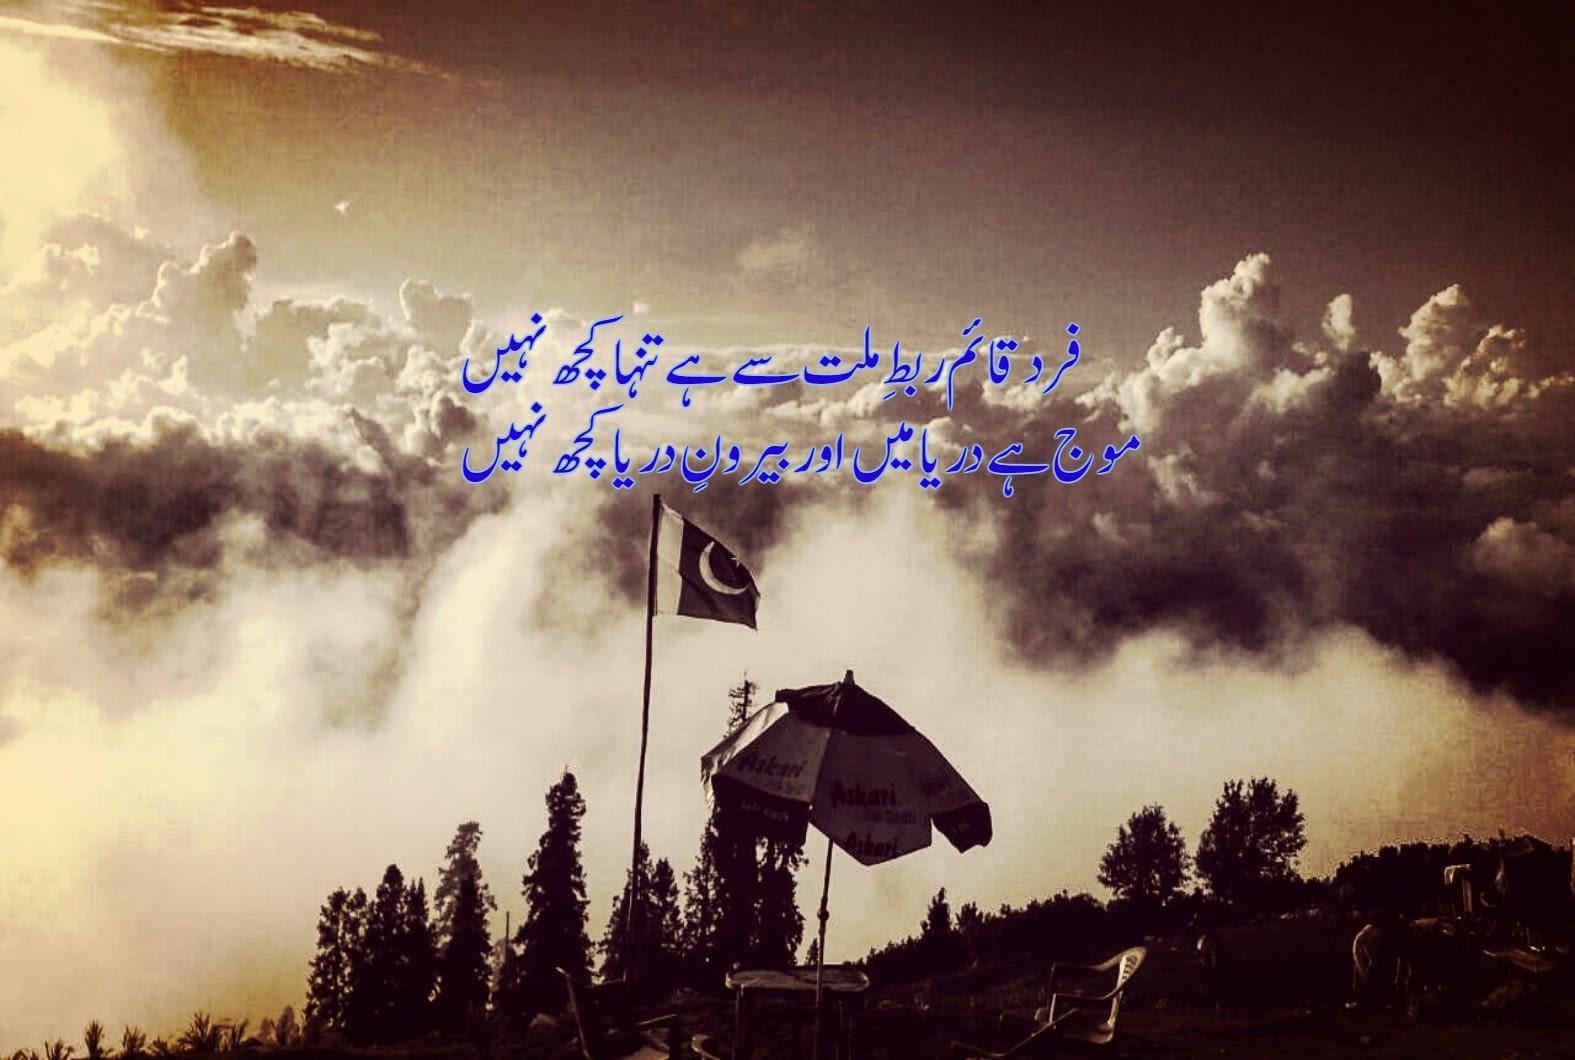 pakistan-Allama-iqbal-poetry-urdu-articles-urdu-content-urdu-poetry